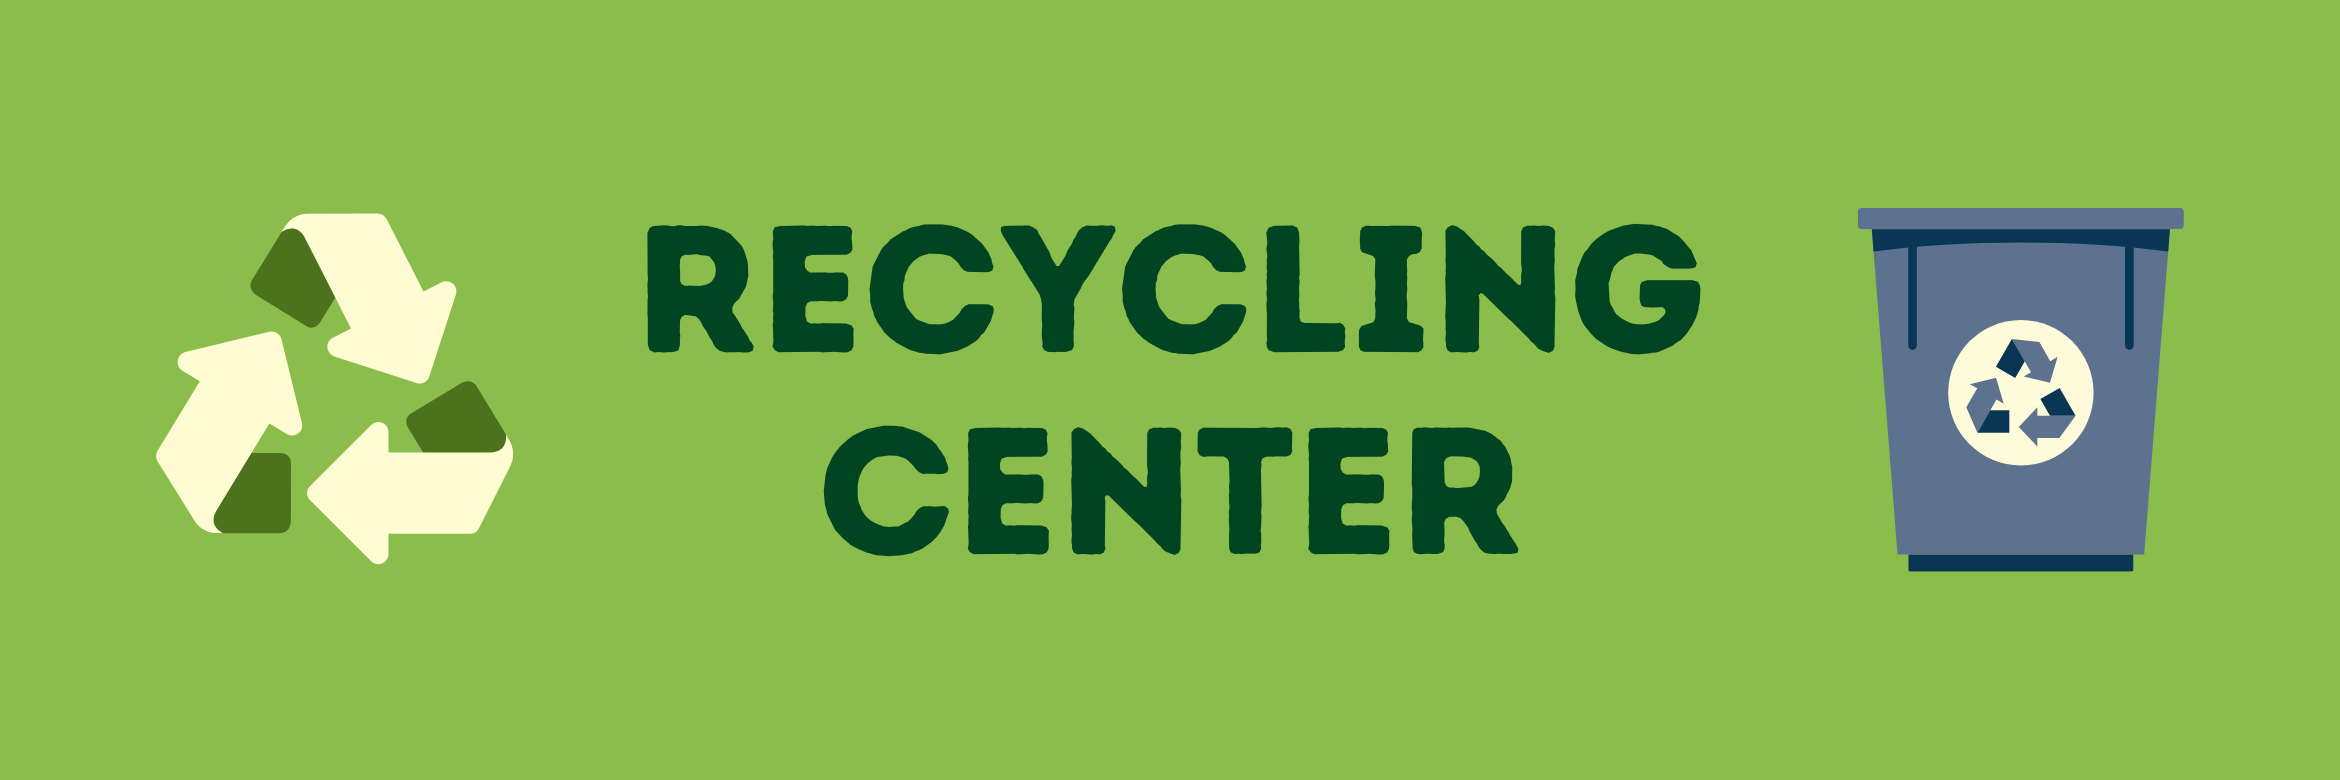 Recycling Center Header